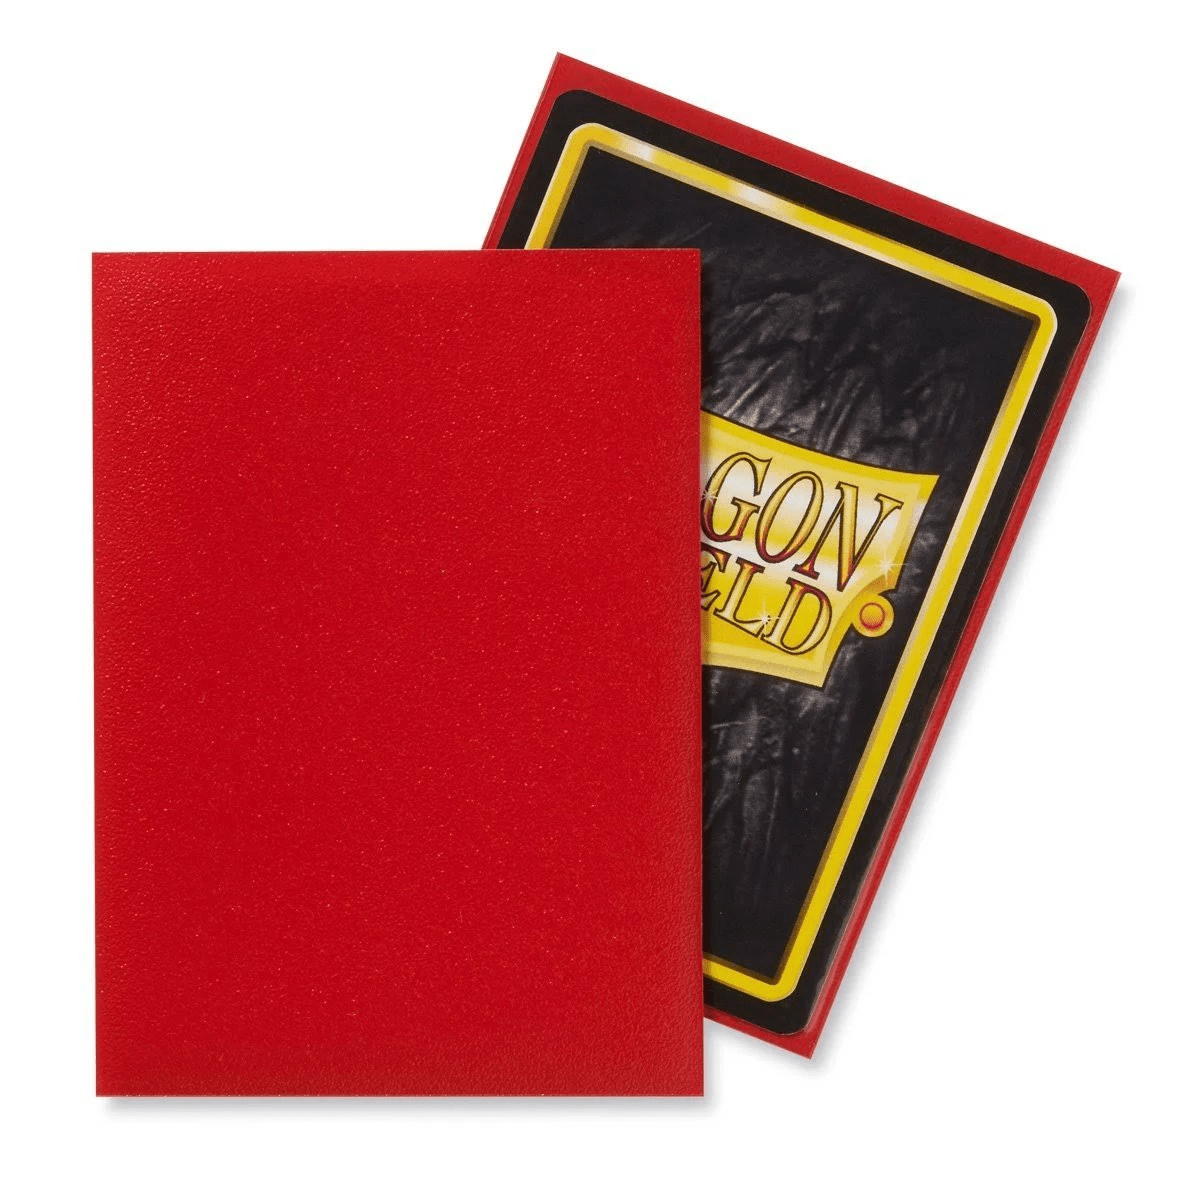 Dragon Shield 100 Count Sleeves Standard Matte Crimson - Gamescape